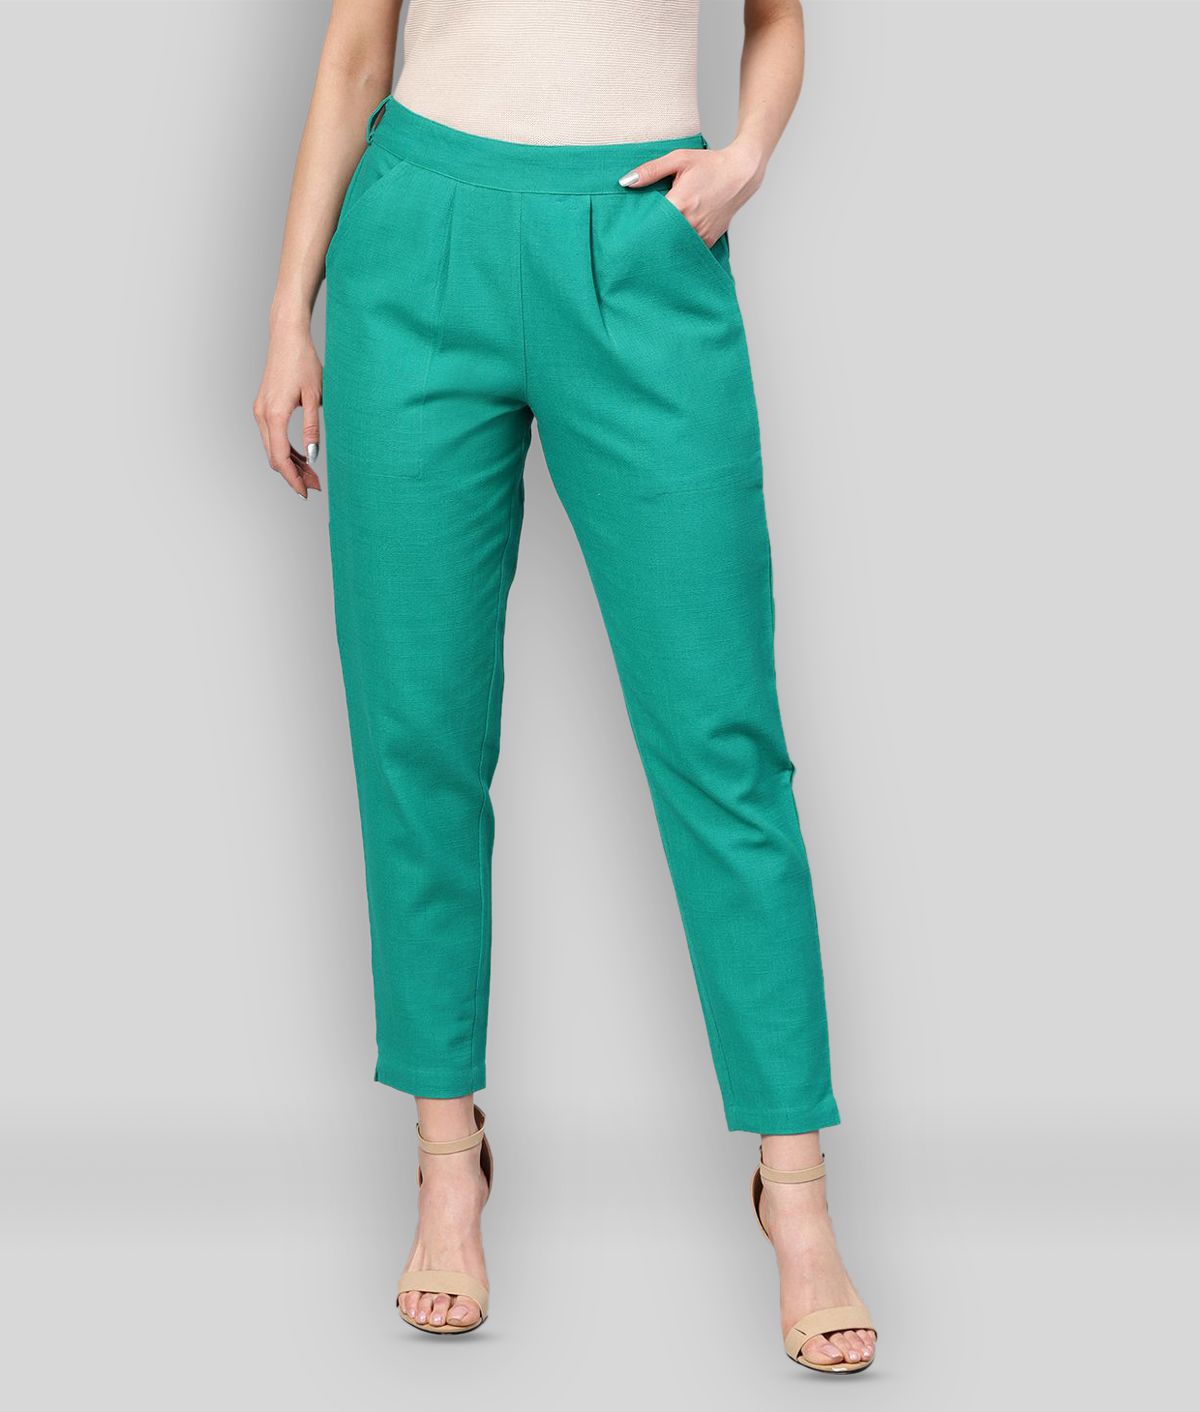 Jaipur Kurti - Turquoise Cotton Blend Straight Fit Women's Cigarette Pants  ( Pack of 1 )